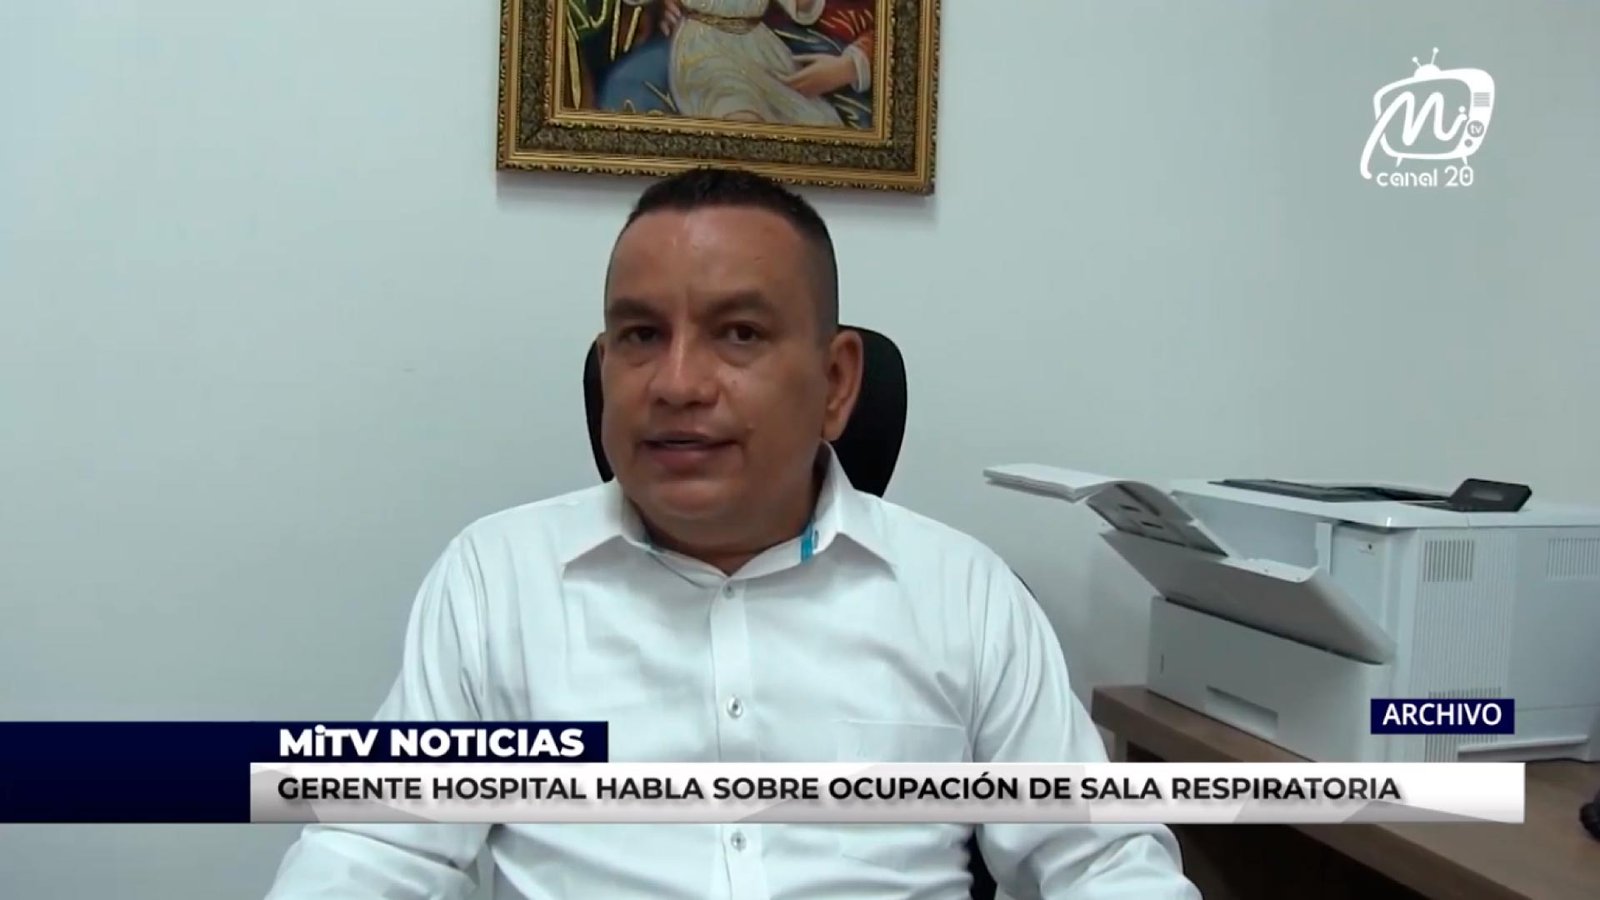 GERENTE HOSPITAL HABLA SOBRE OCUPACIÓN DE SALA RESPIRATORIA